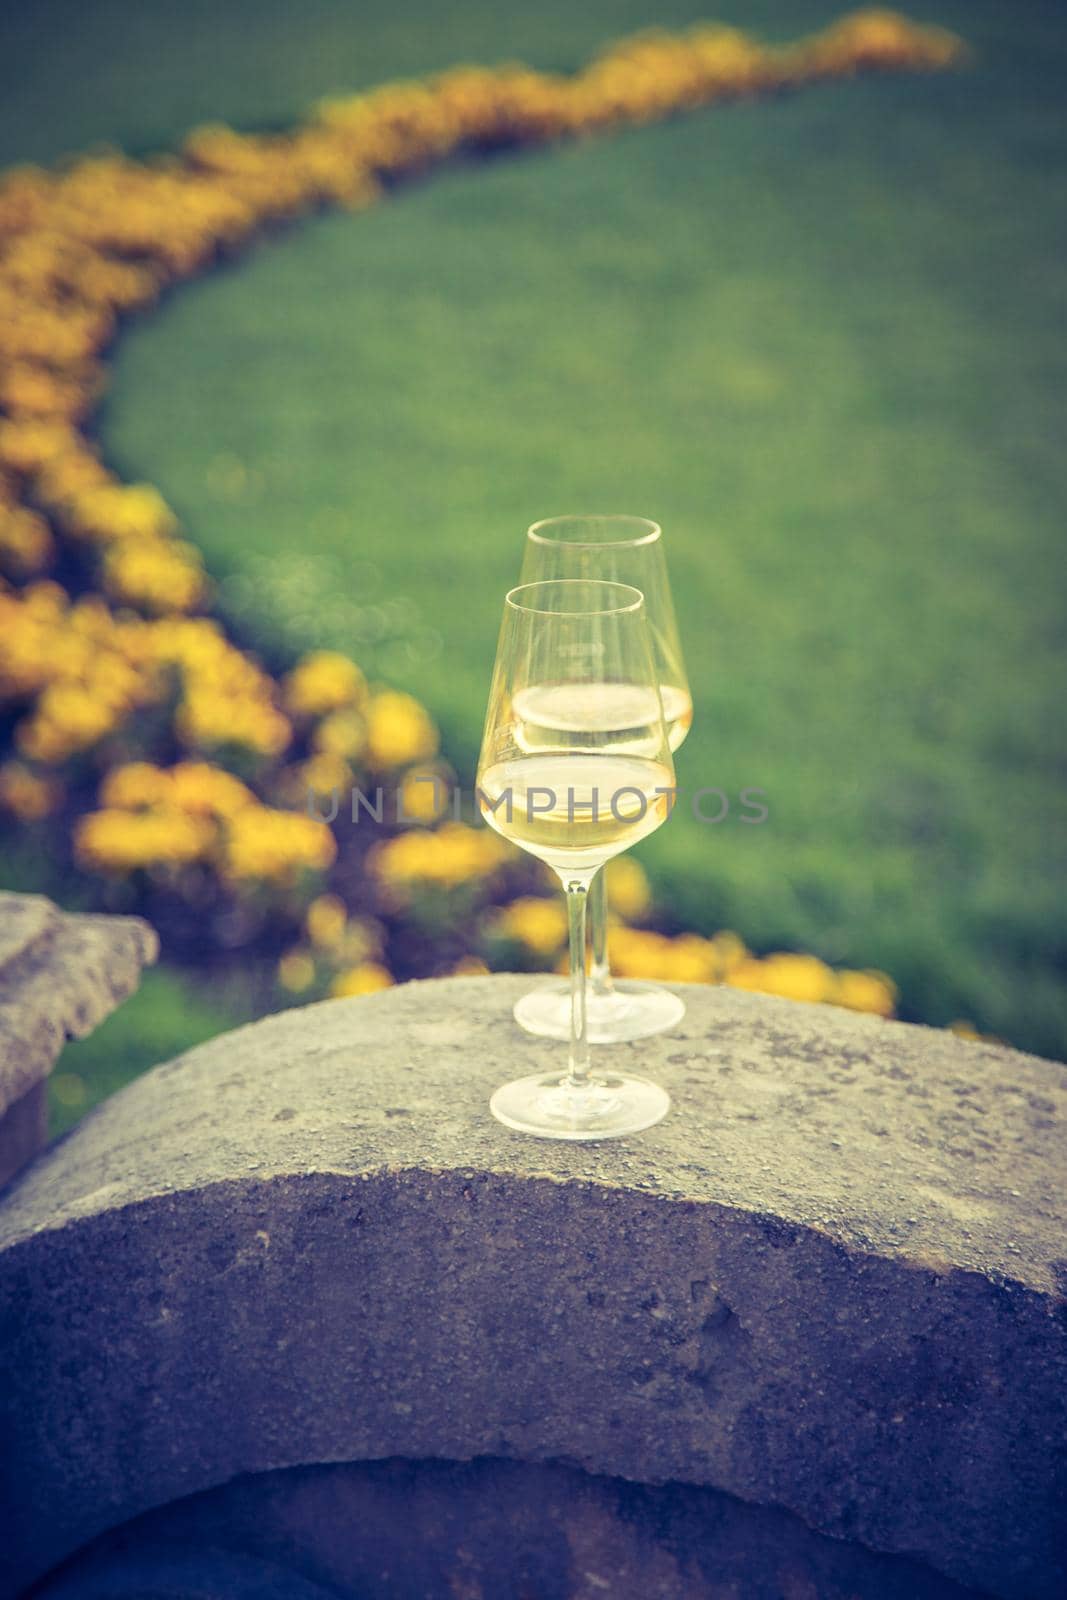 Enjoying a glass of white wine in the own garden. Evening sun, summertime. by Daxenbichler